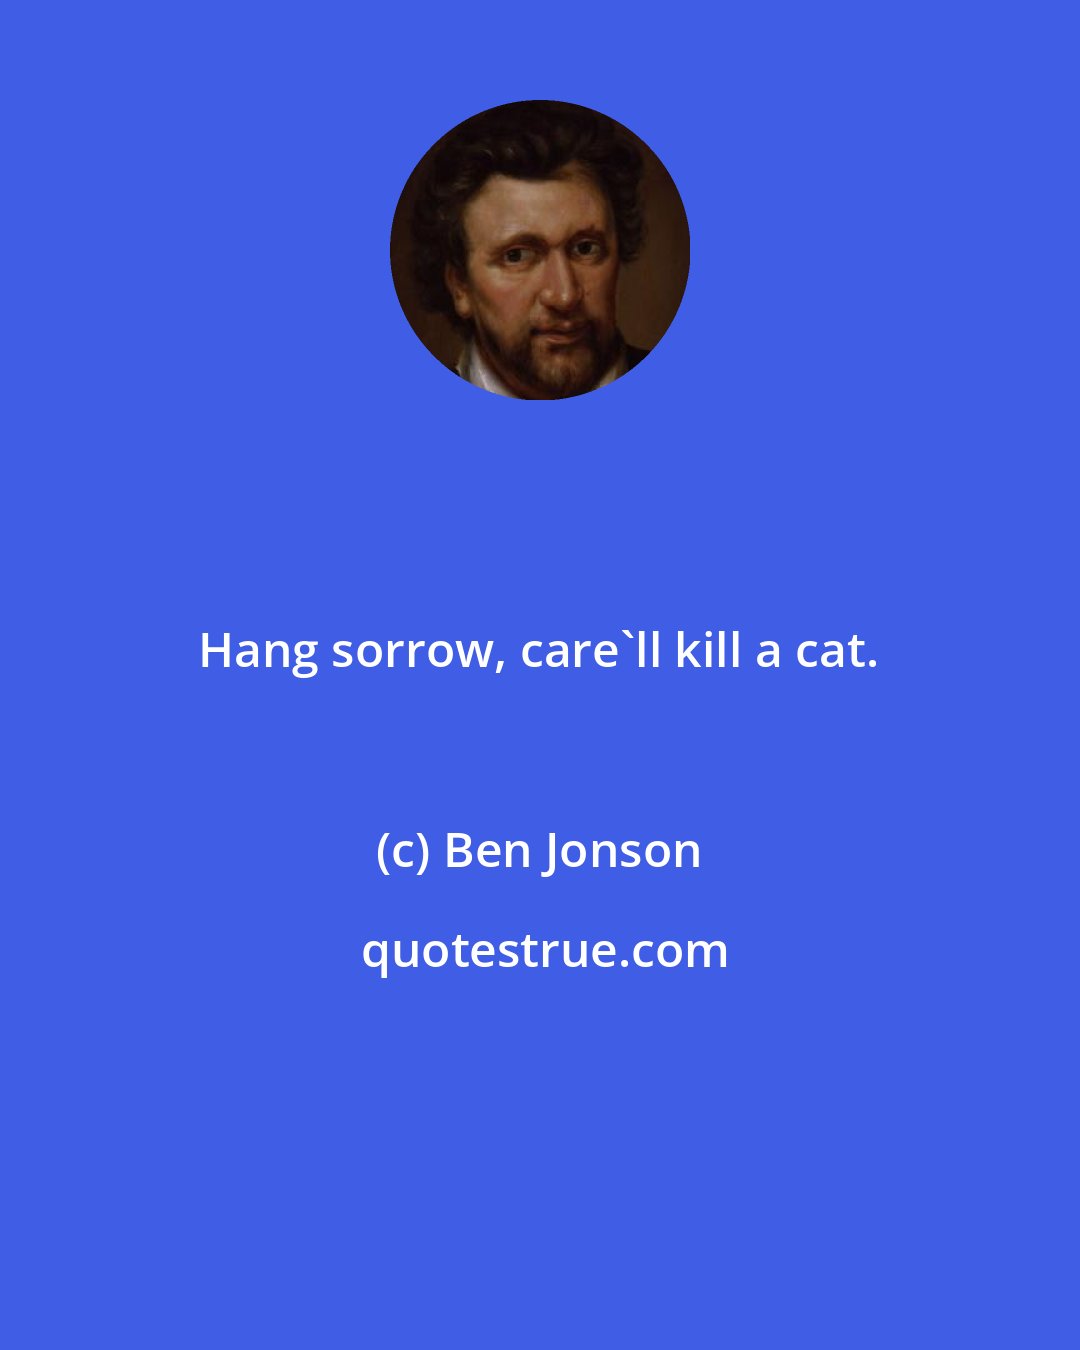 Ben Jonson: Hang sorrow, care'll kill a cat.